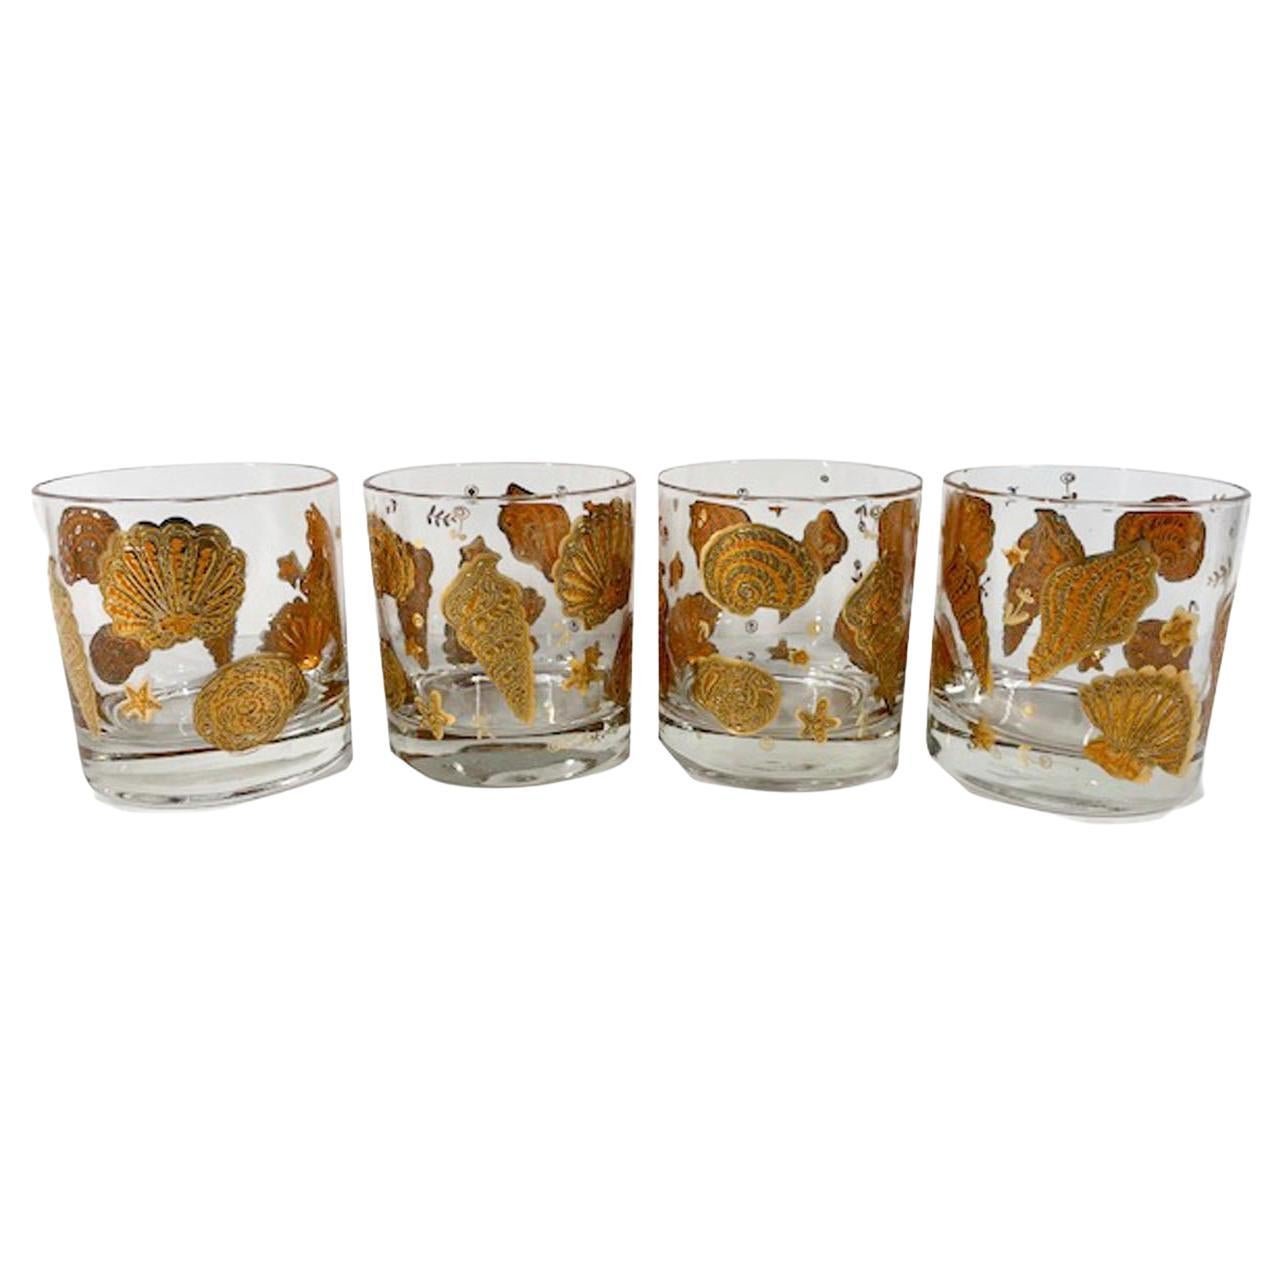 Quatre verres à roche Culver en verrerie à motif de Marina or et orange